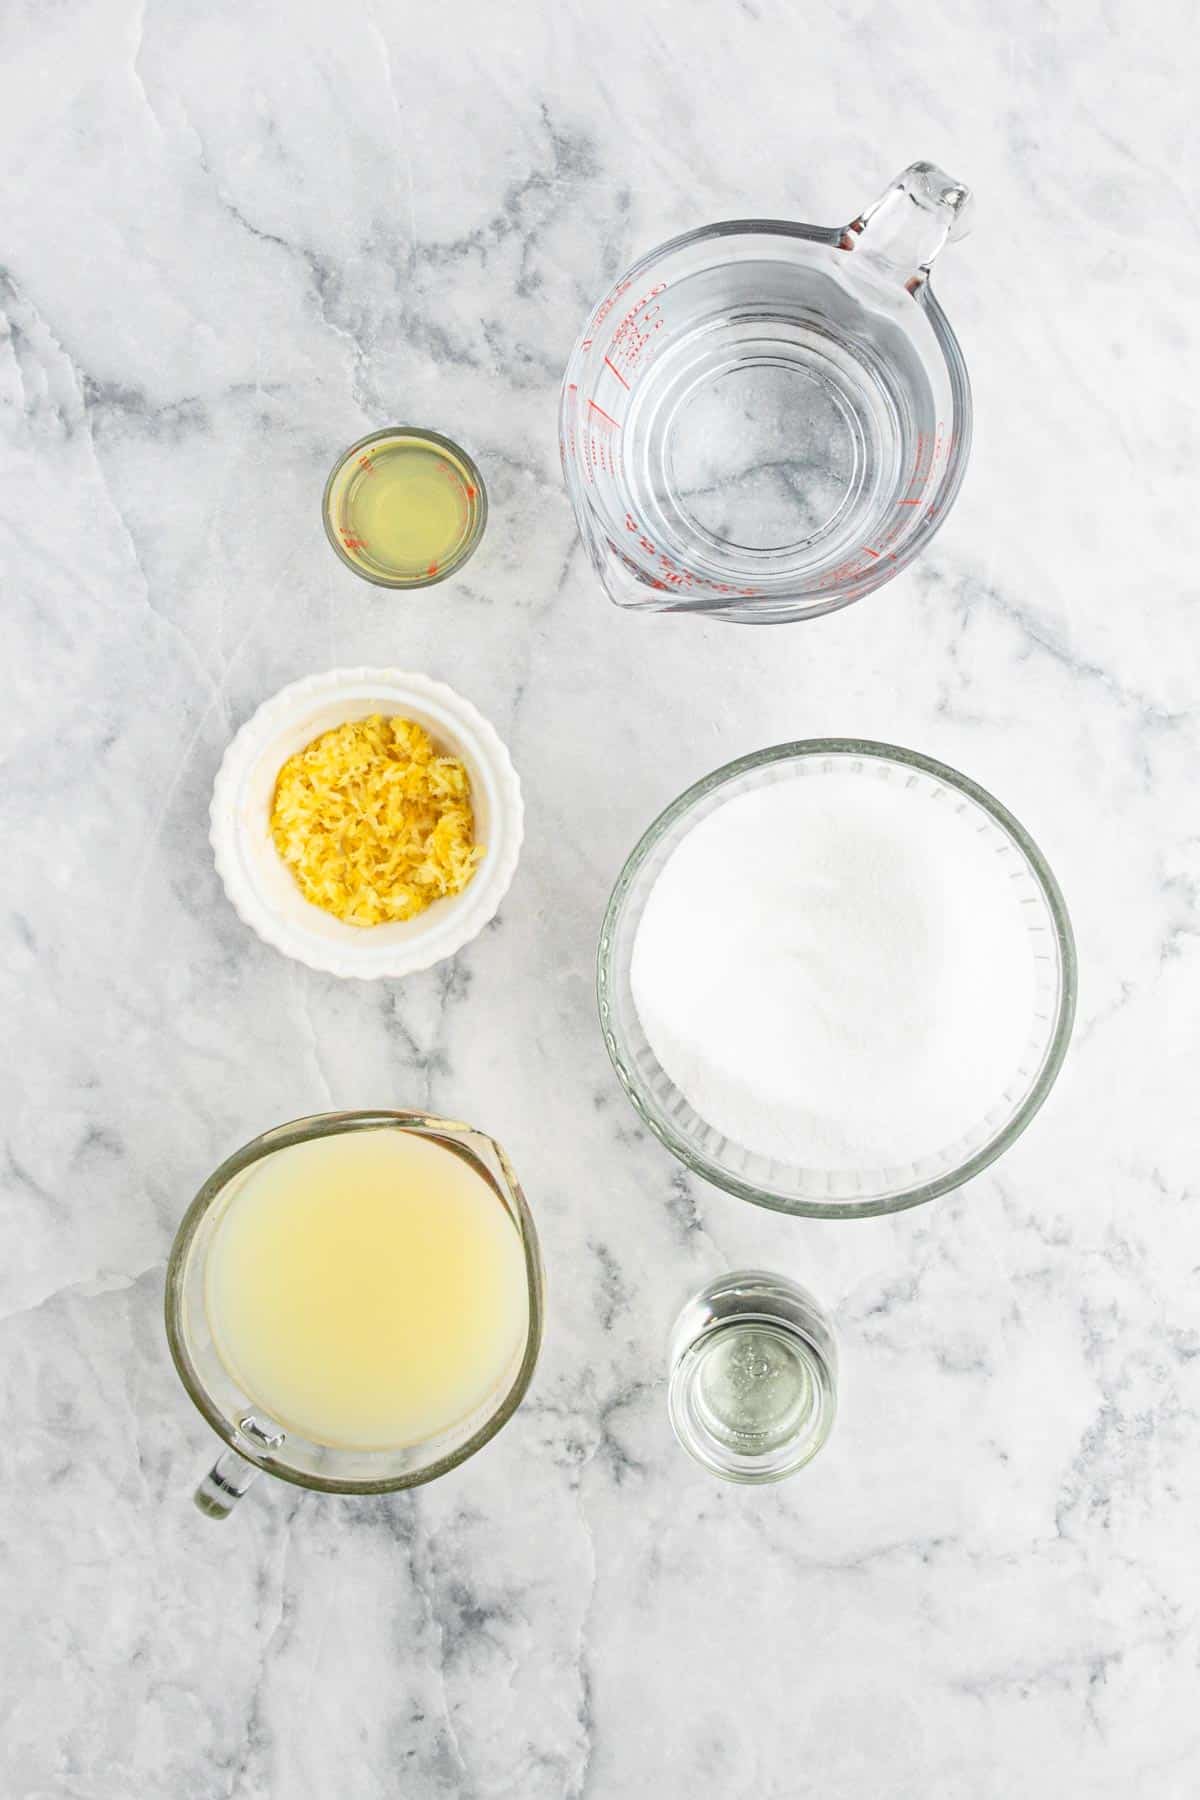 Ingredients to make lemonade sorbet on the table.